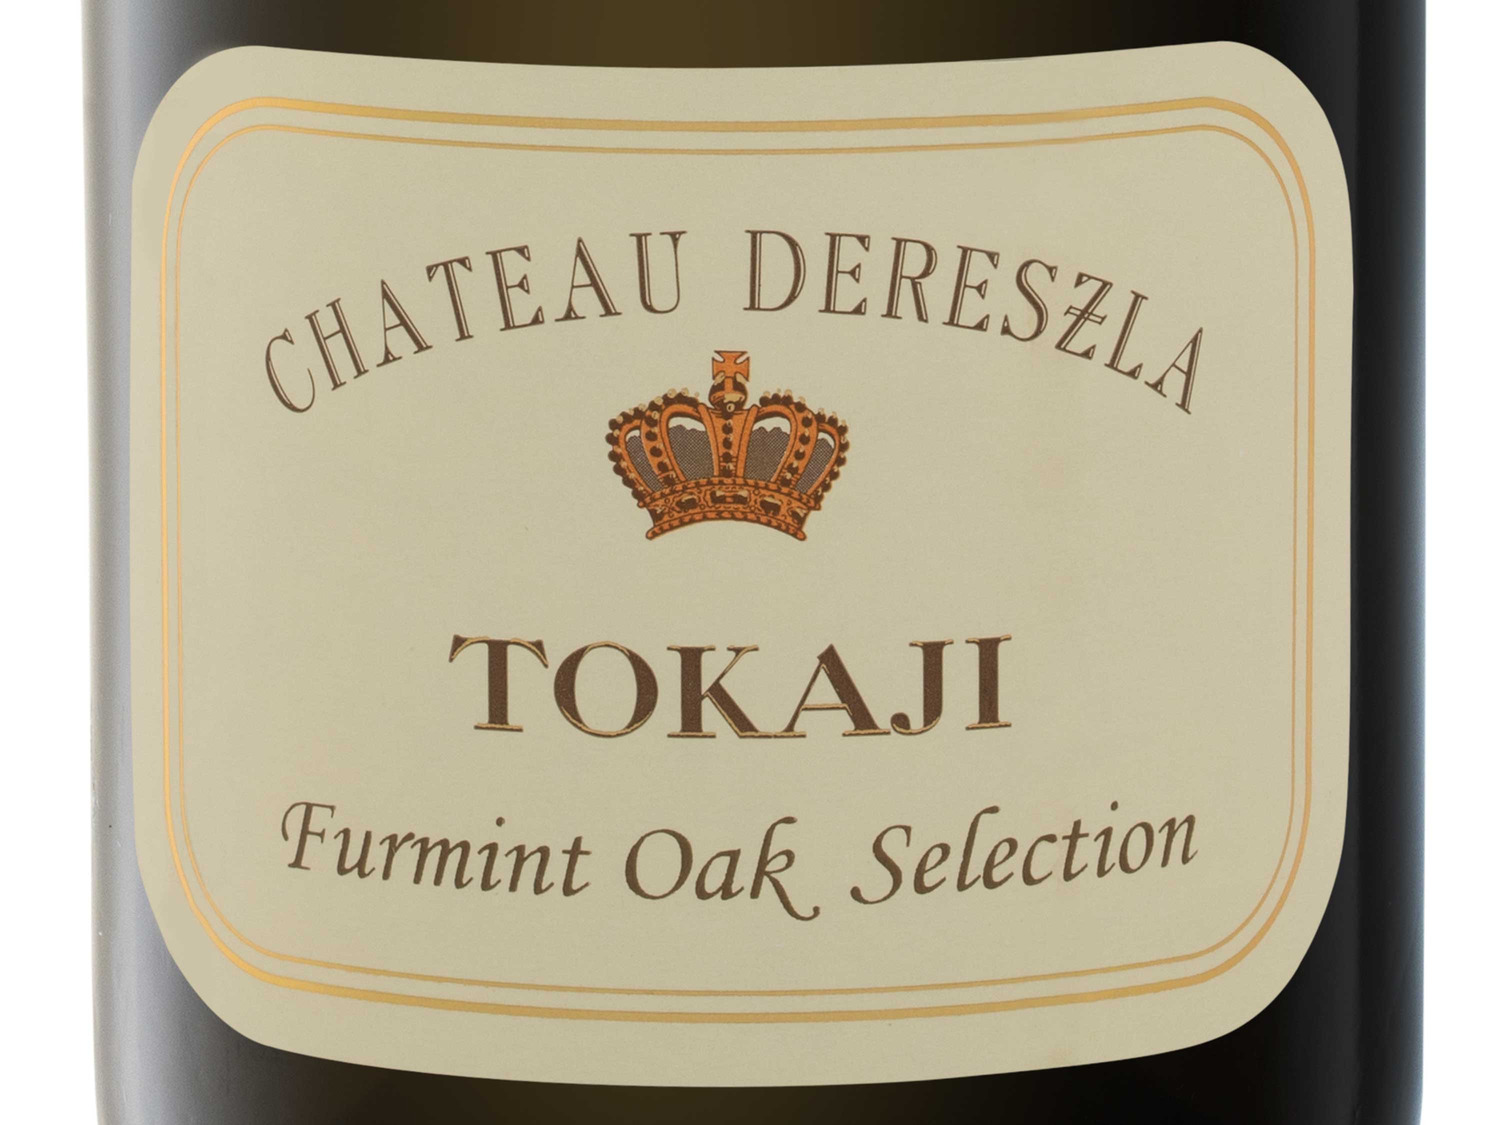 Tokaji Dereszla Chateau Oak trocken,… Furmint Selection